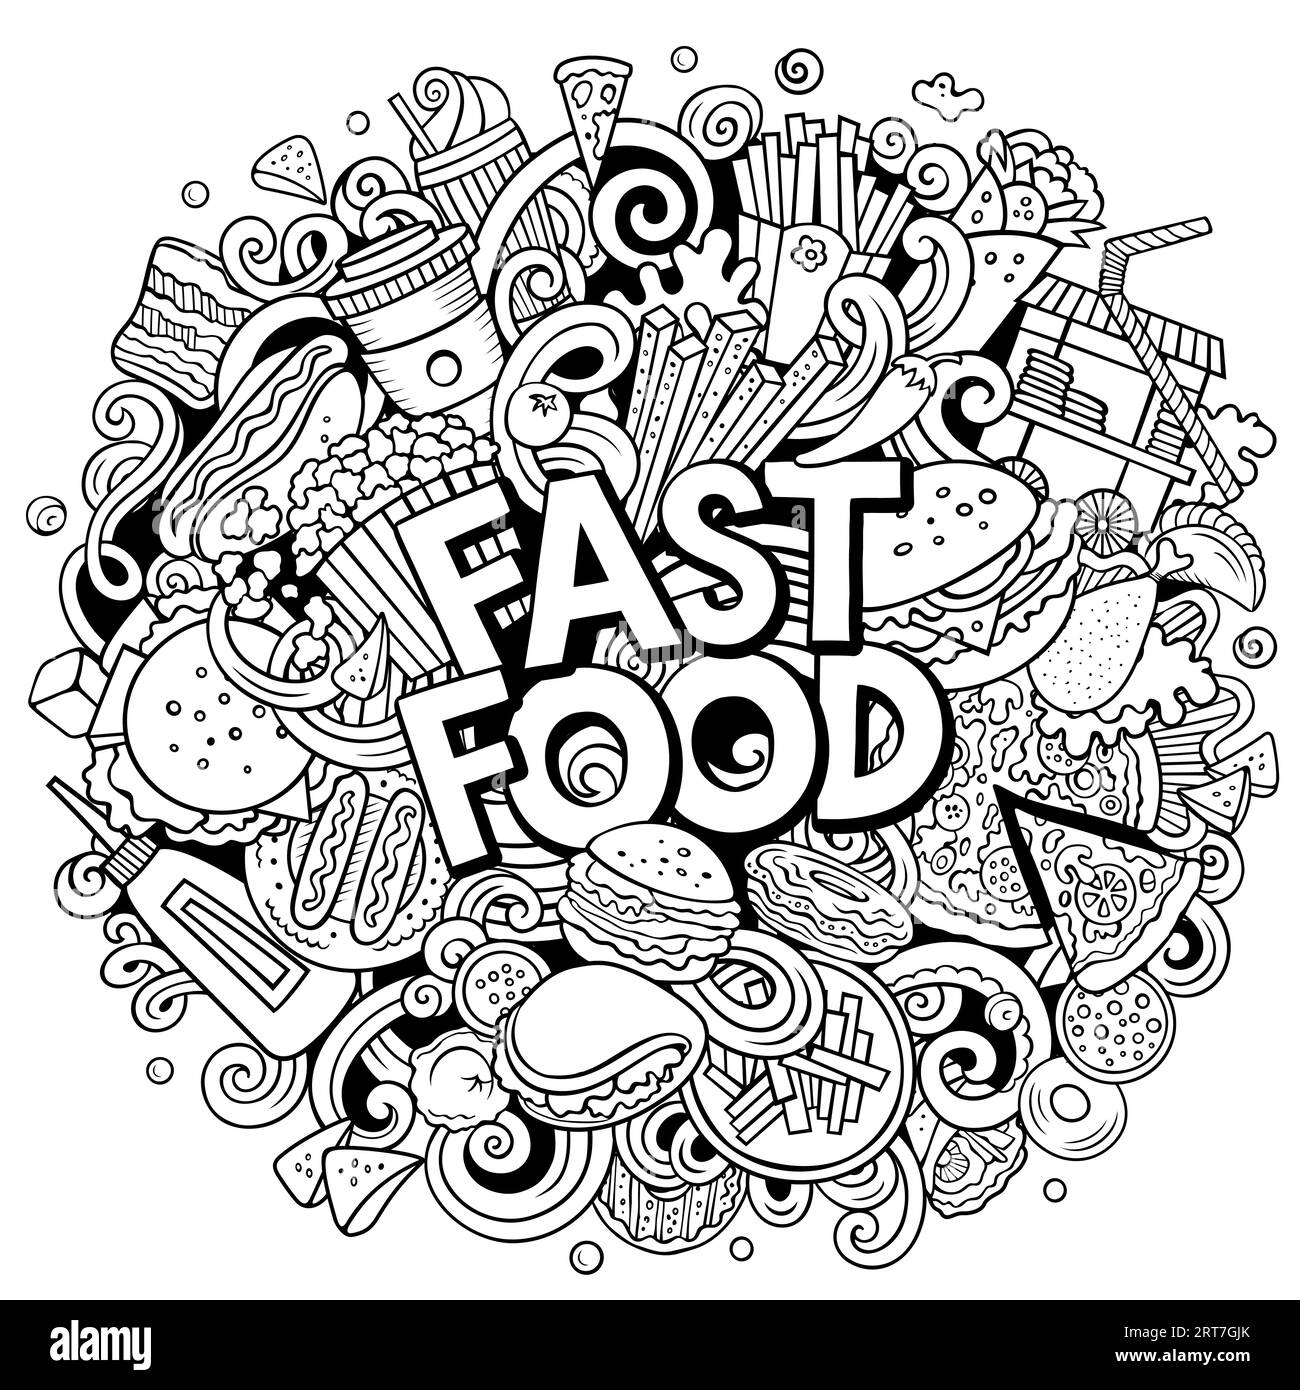 Fastfood-Cartoon-Doodles-Illustration. Fast Food lustige Objekte und Elemente Vektordesign. Stock Vektor